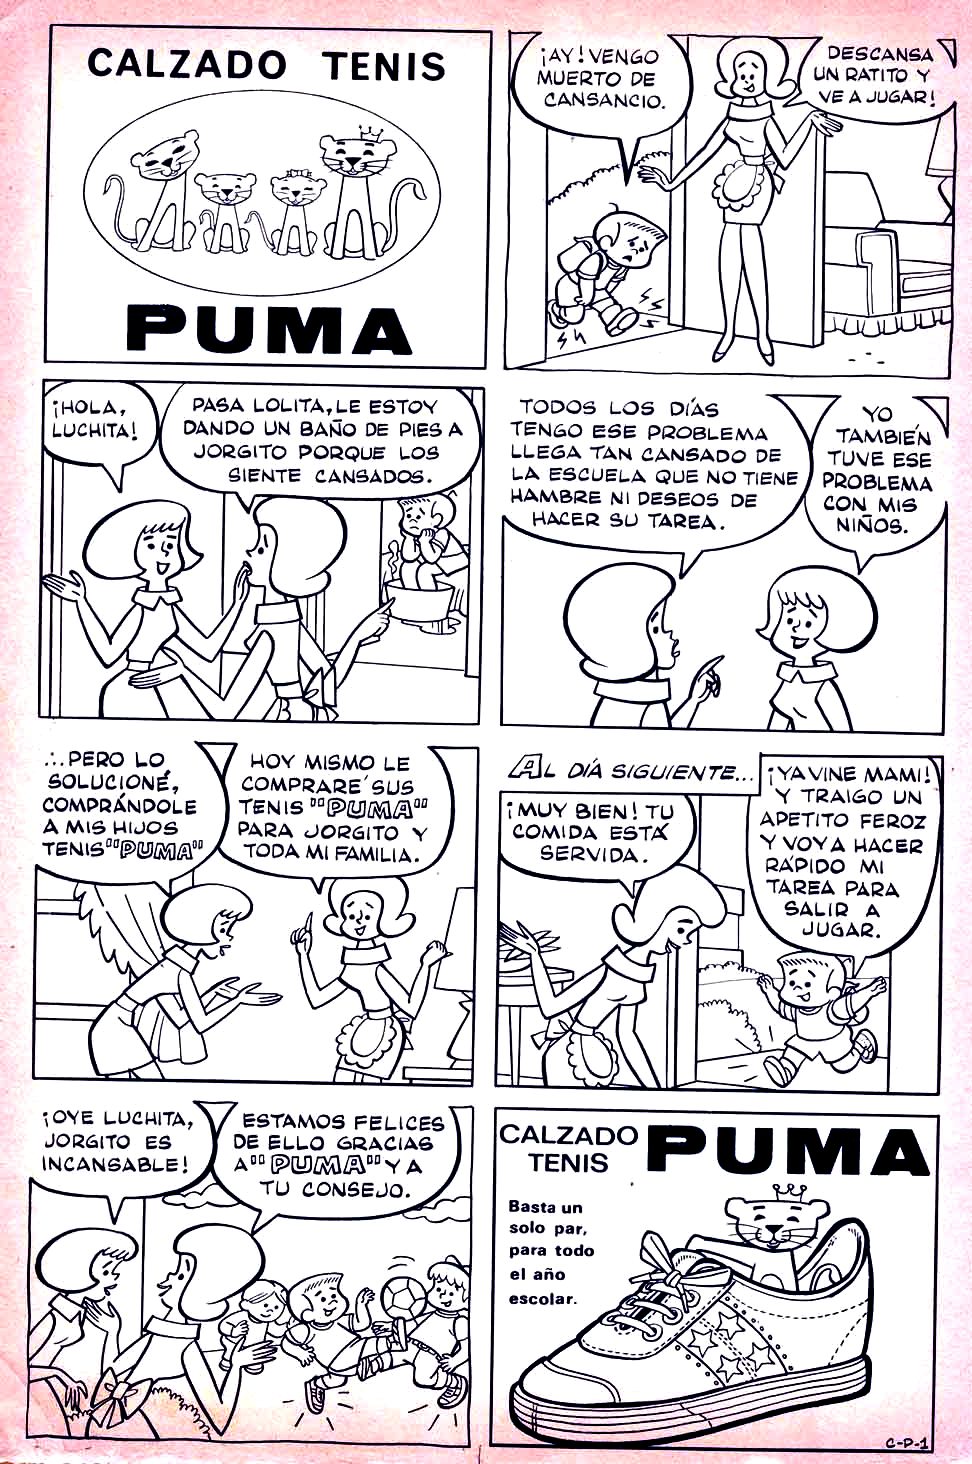 [Puma+Comic.jpg]